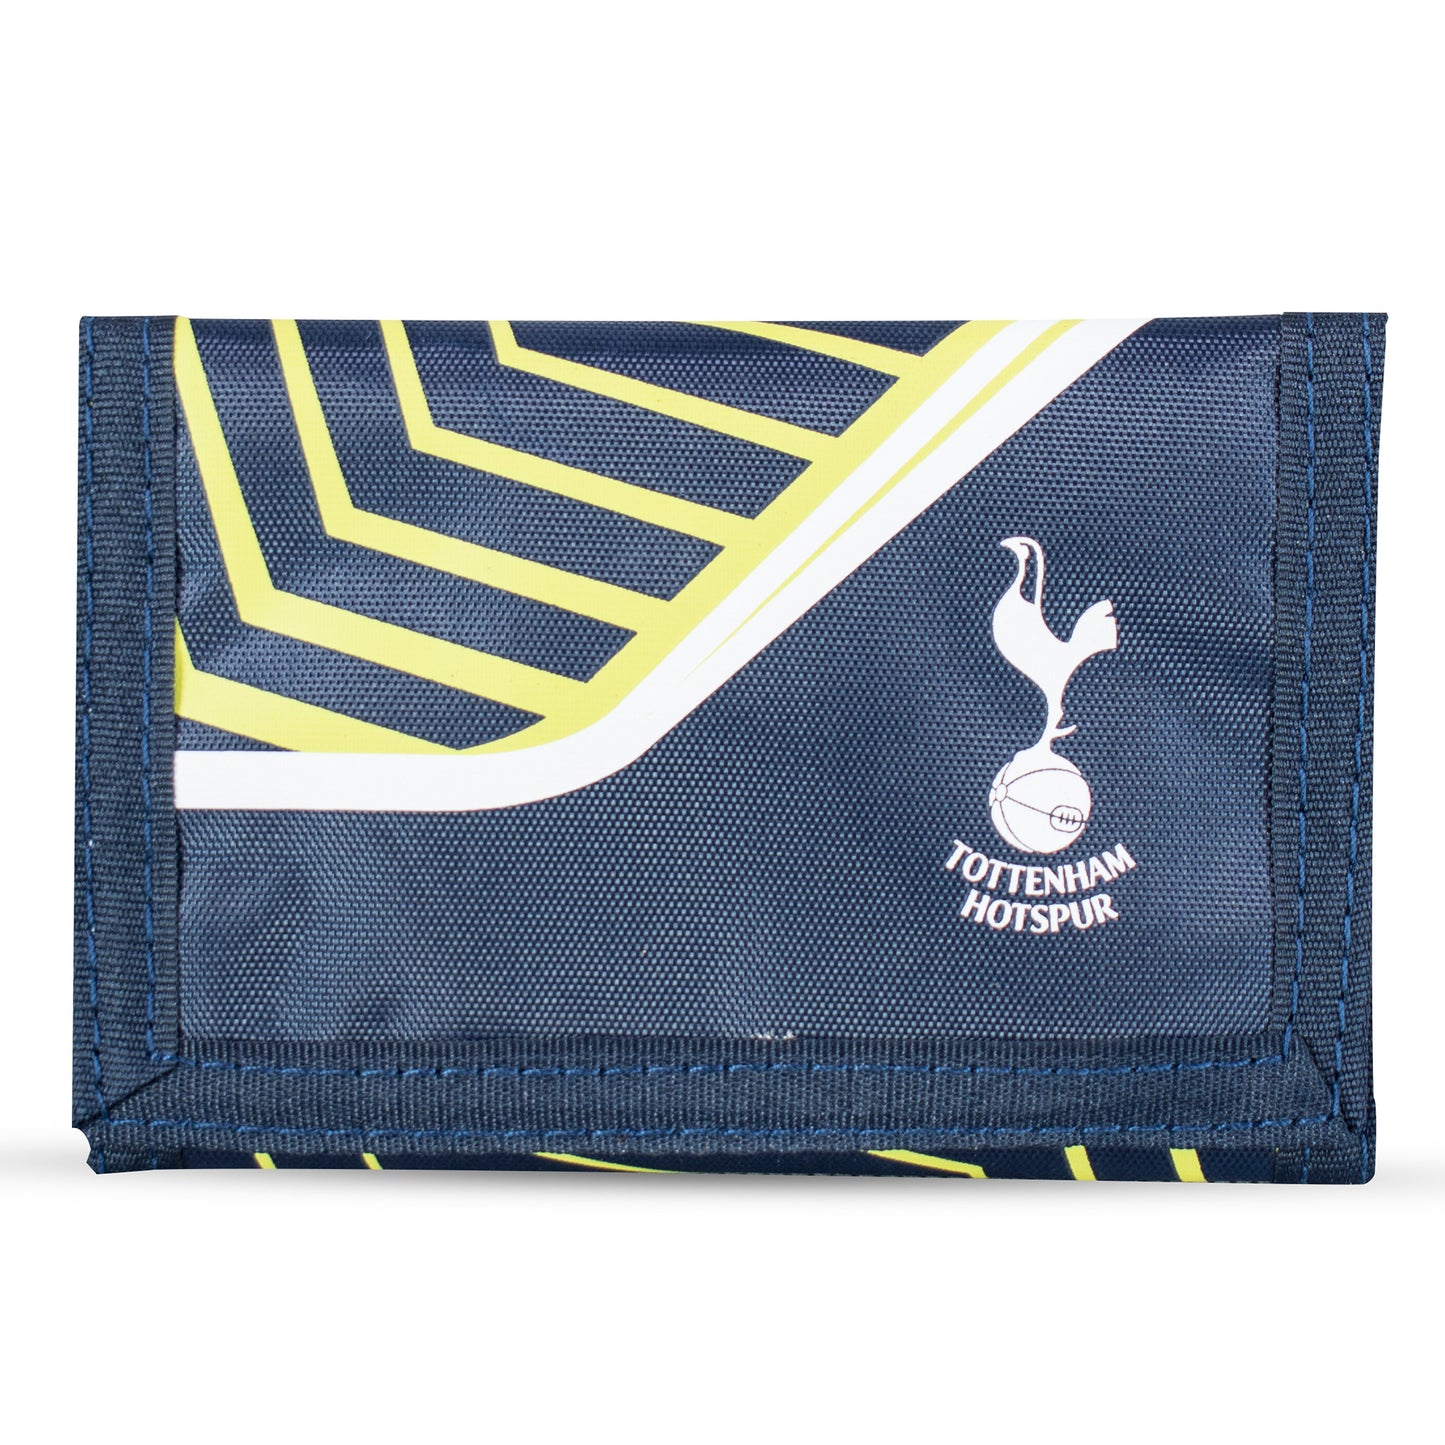 Tottenham Hotspur Flash Wallet